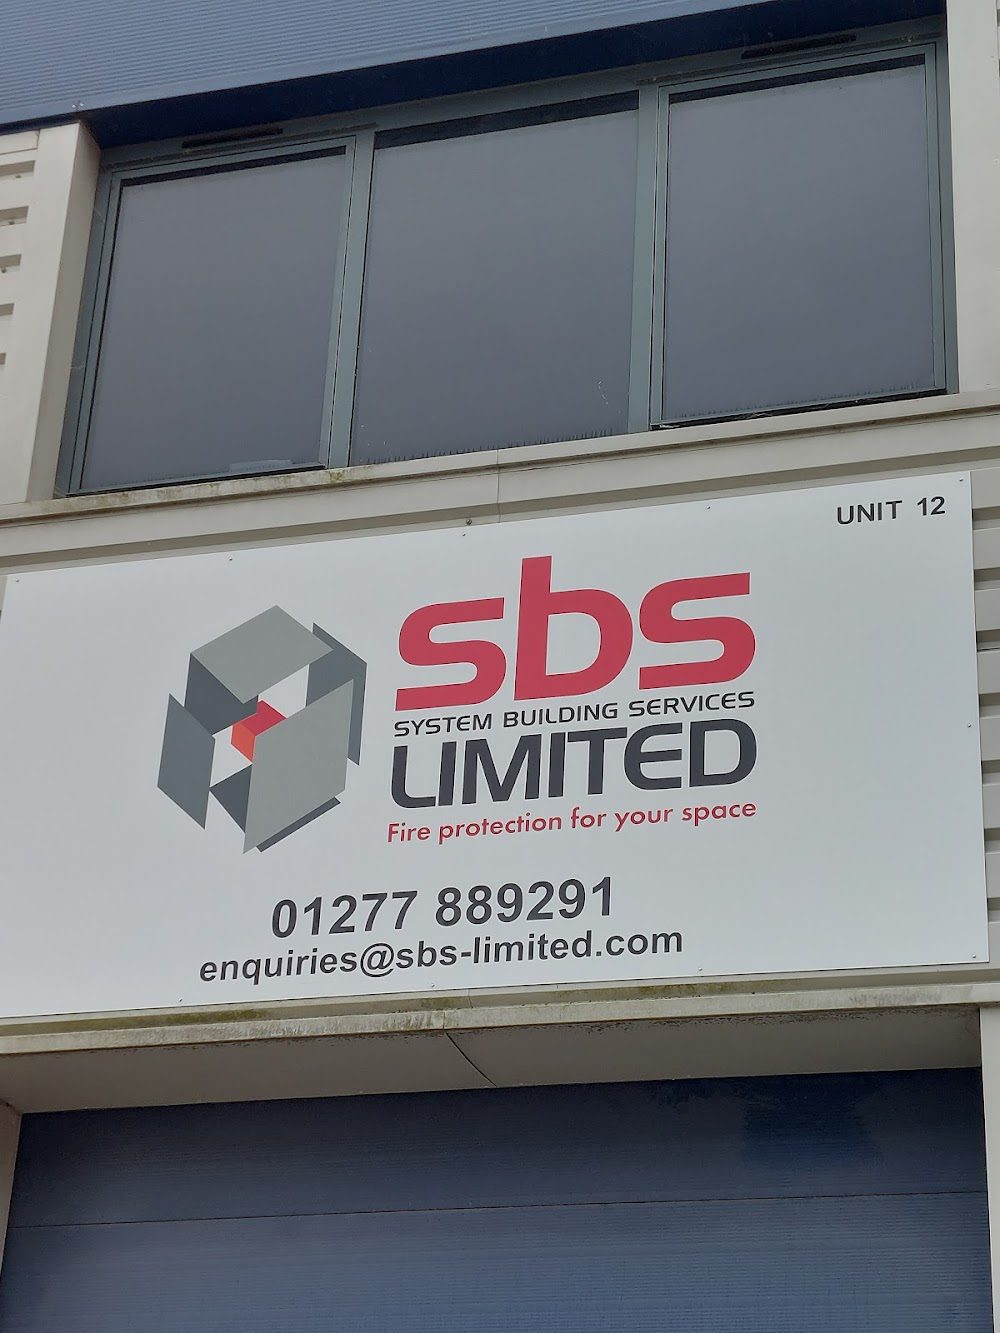 System Building Services Ltd